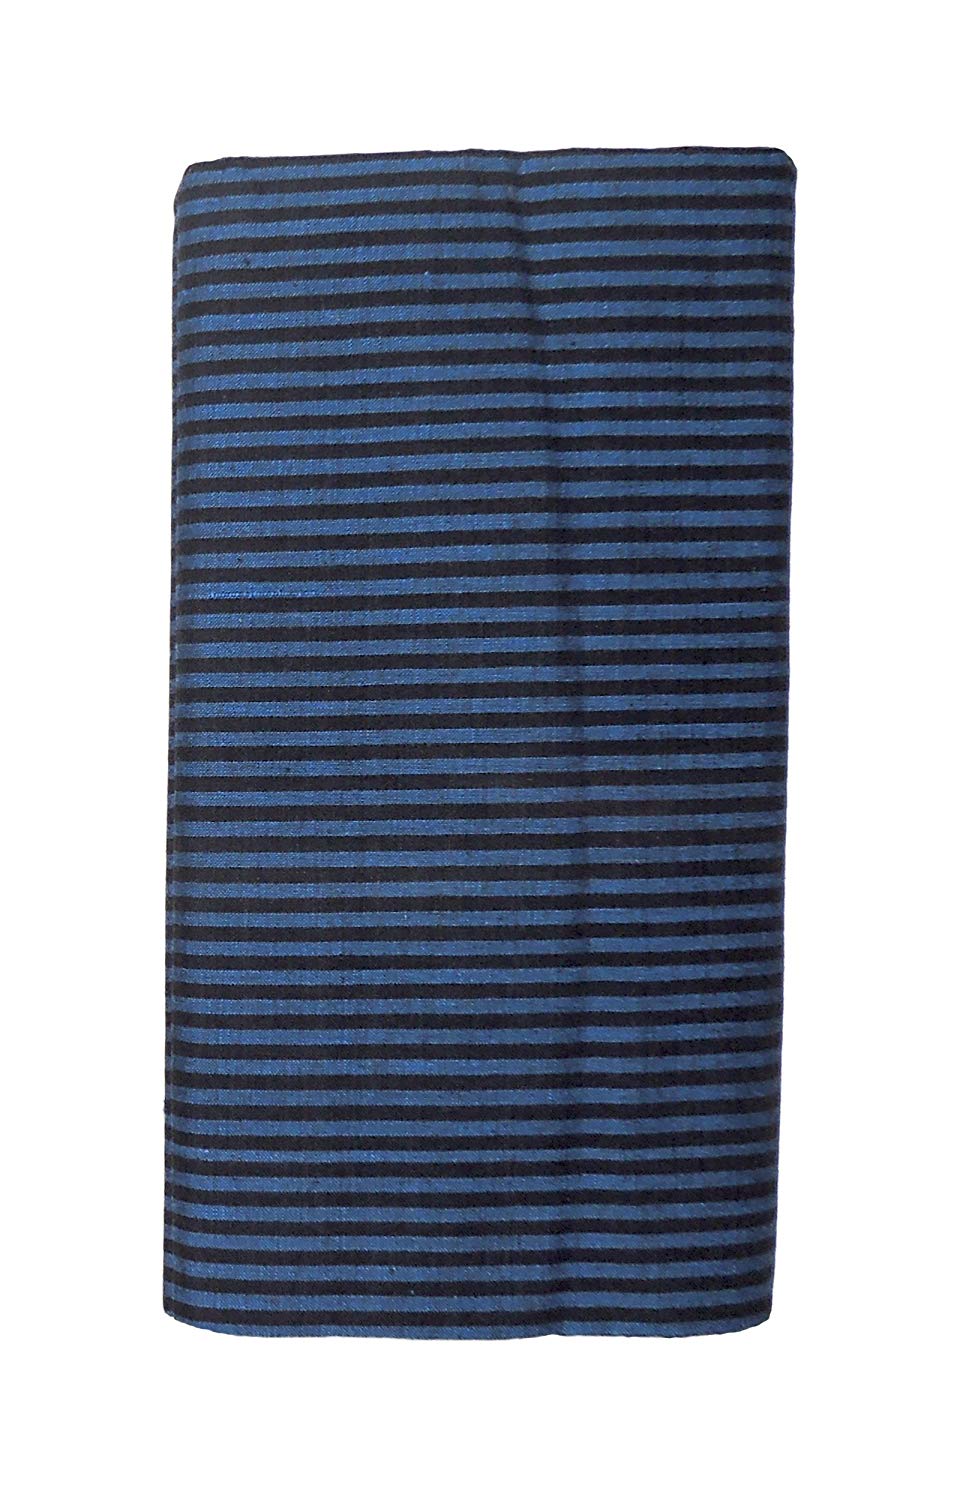 Bhagalpuri-Handloom-Men-Lungi-Black-Blue-Striped-B0781H6VP2.jpg